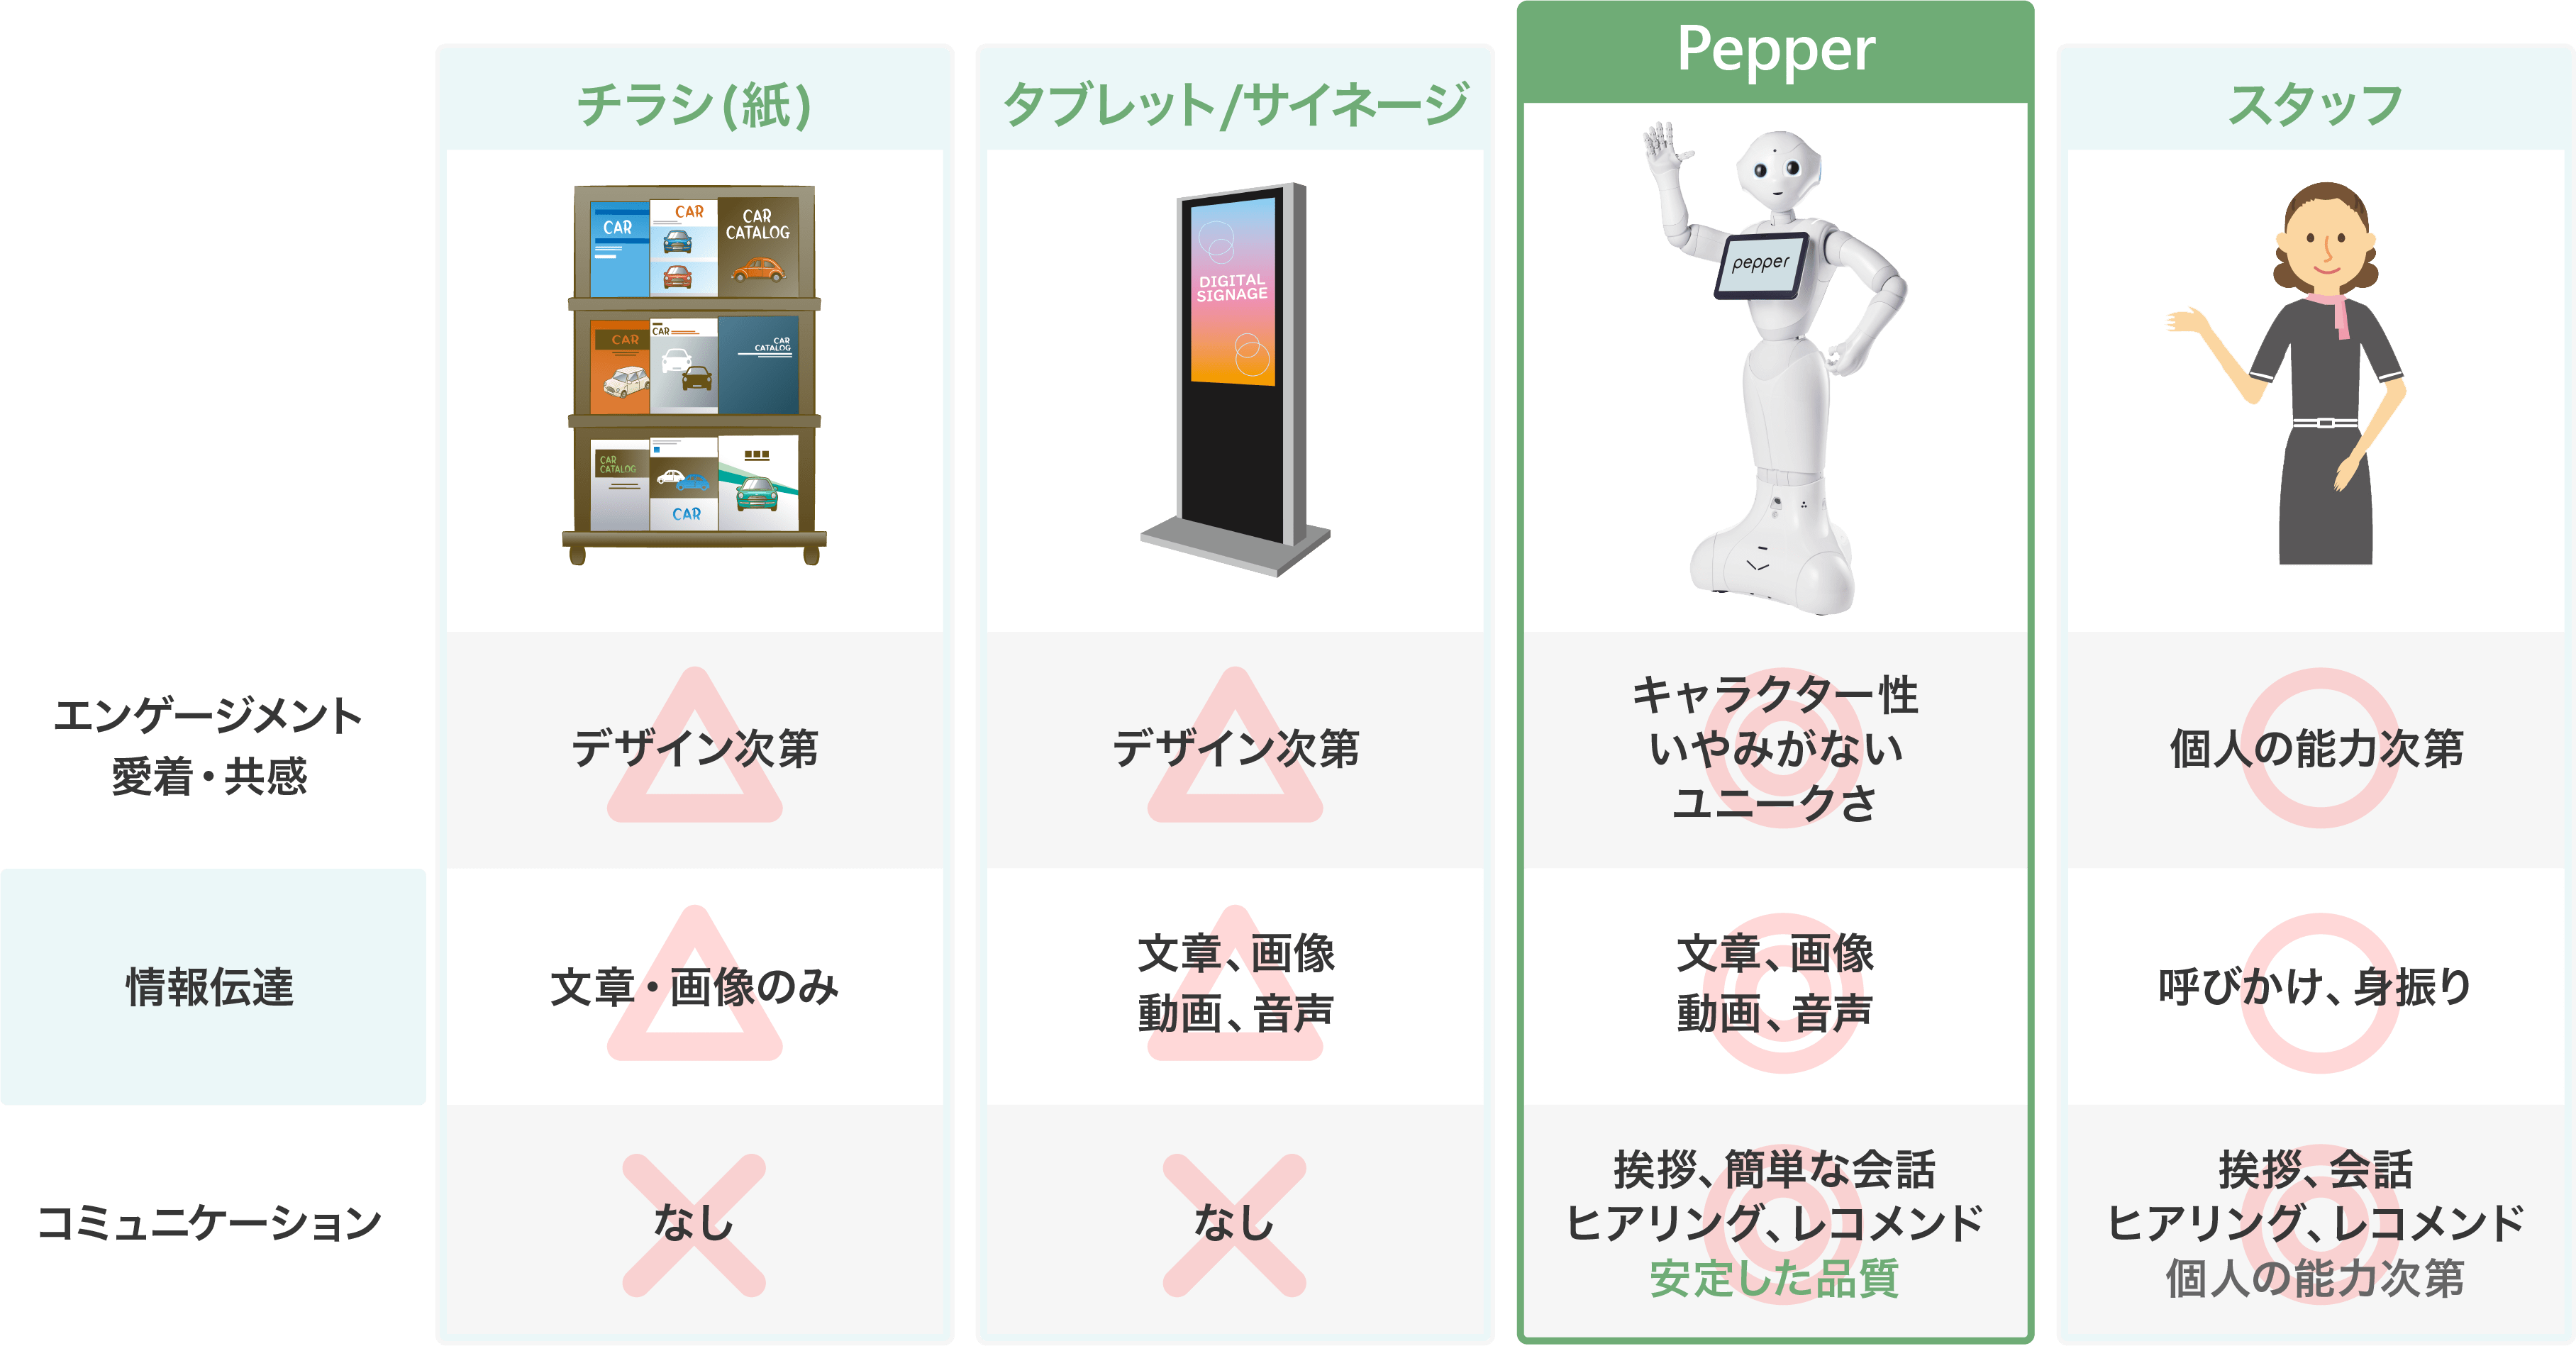 Pepperによる販促・接客の特長